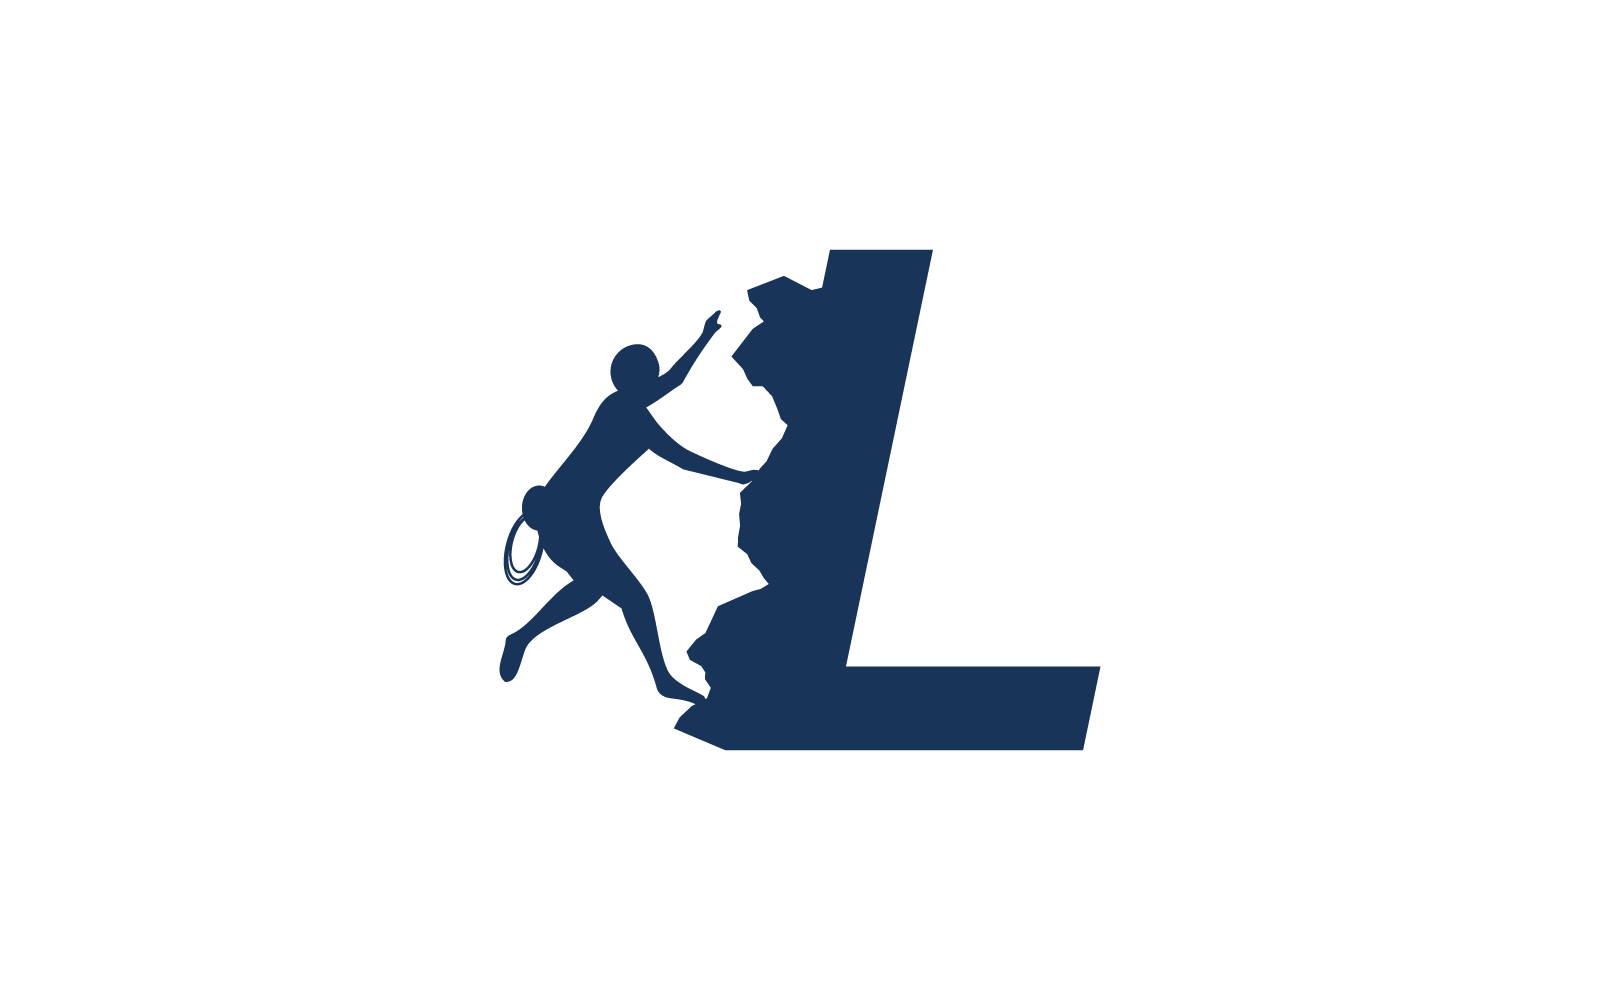 Rock climber logo with alphabet design vector template